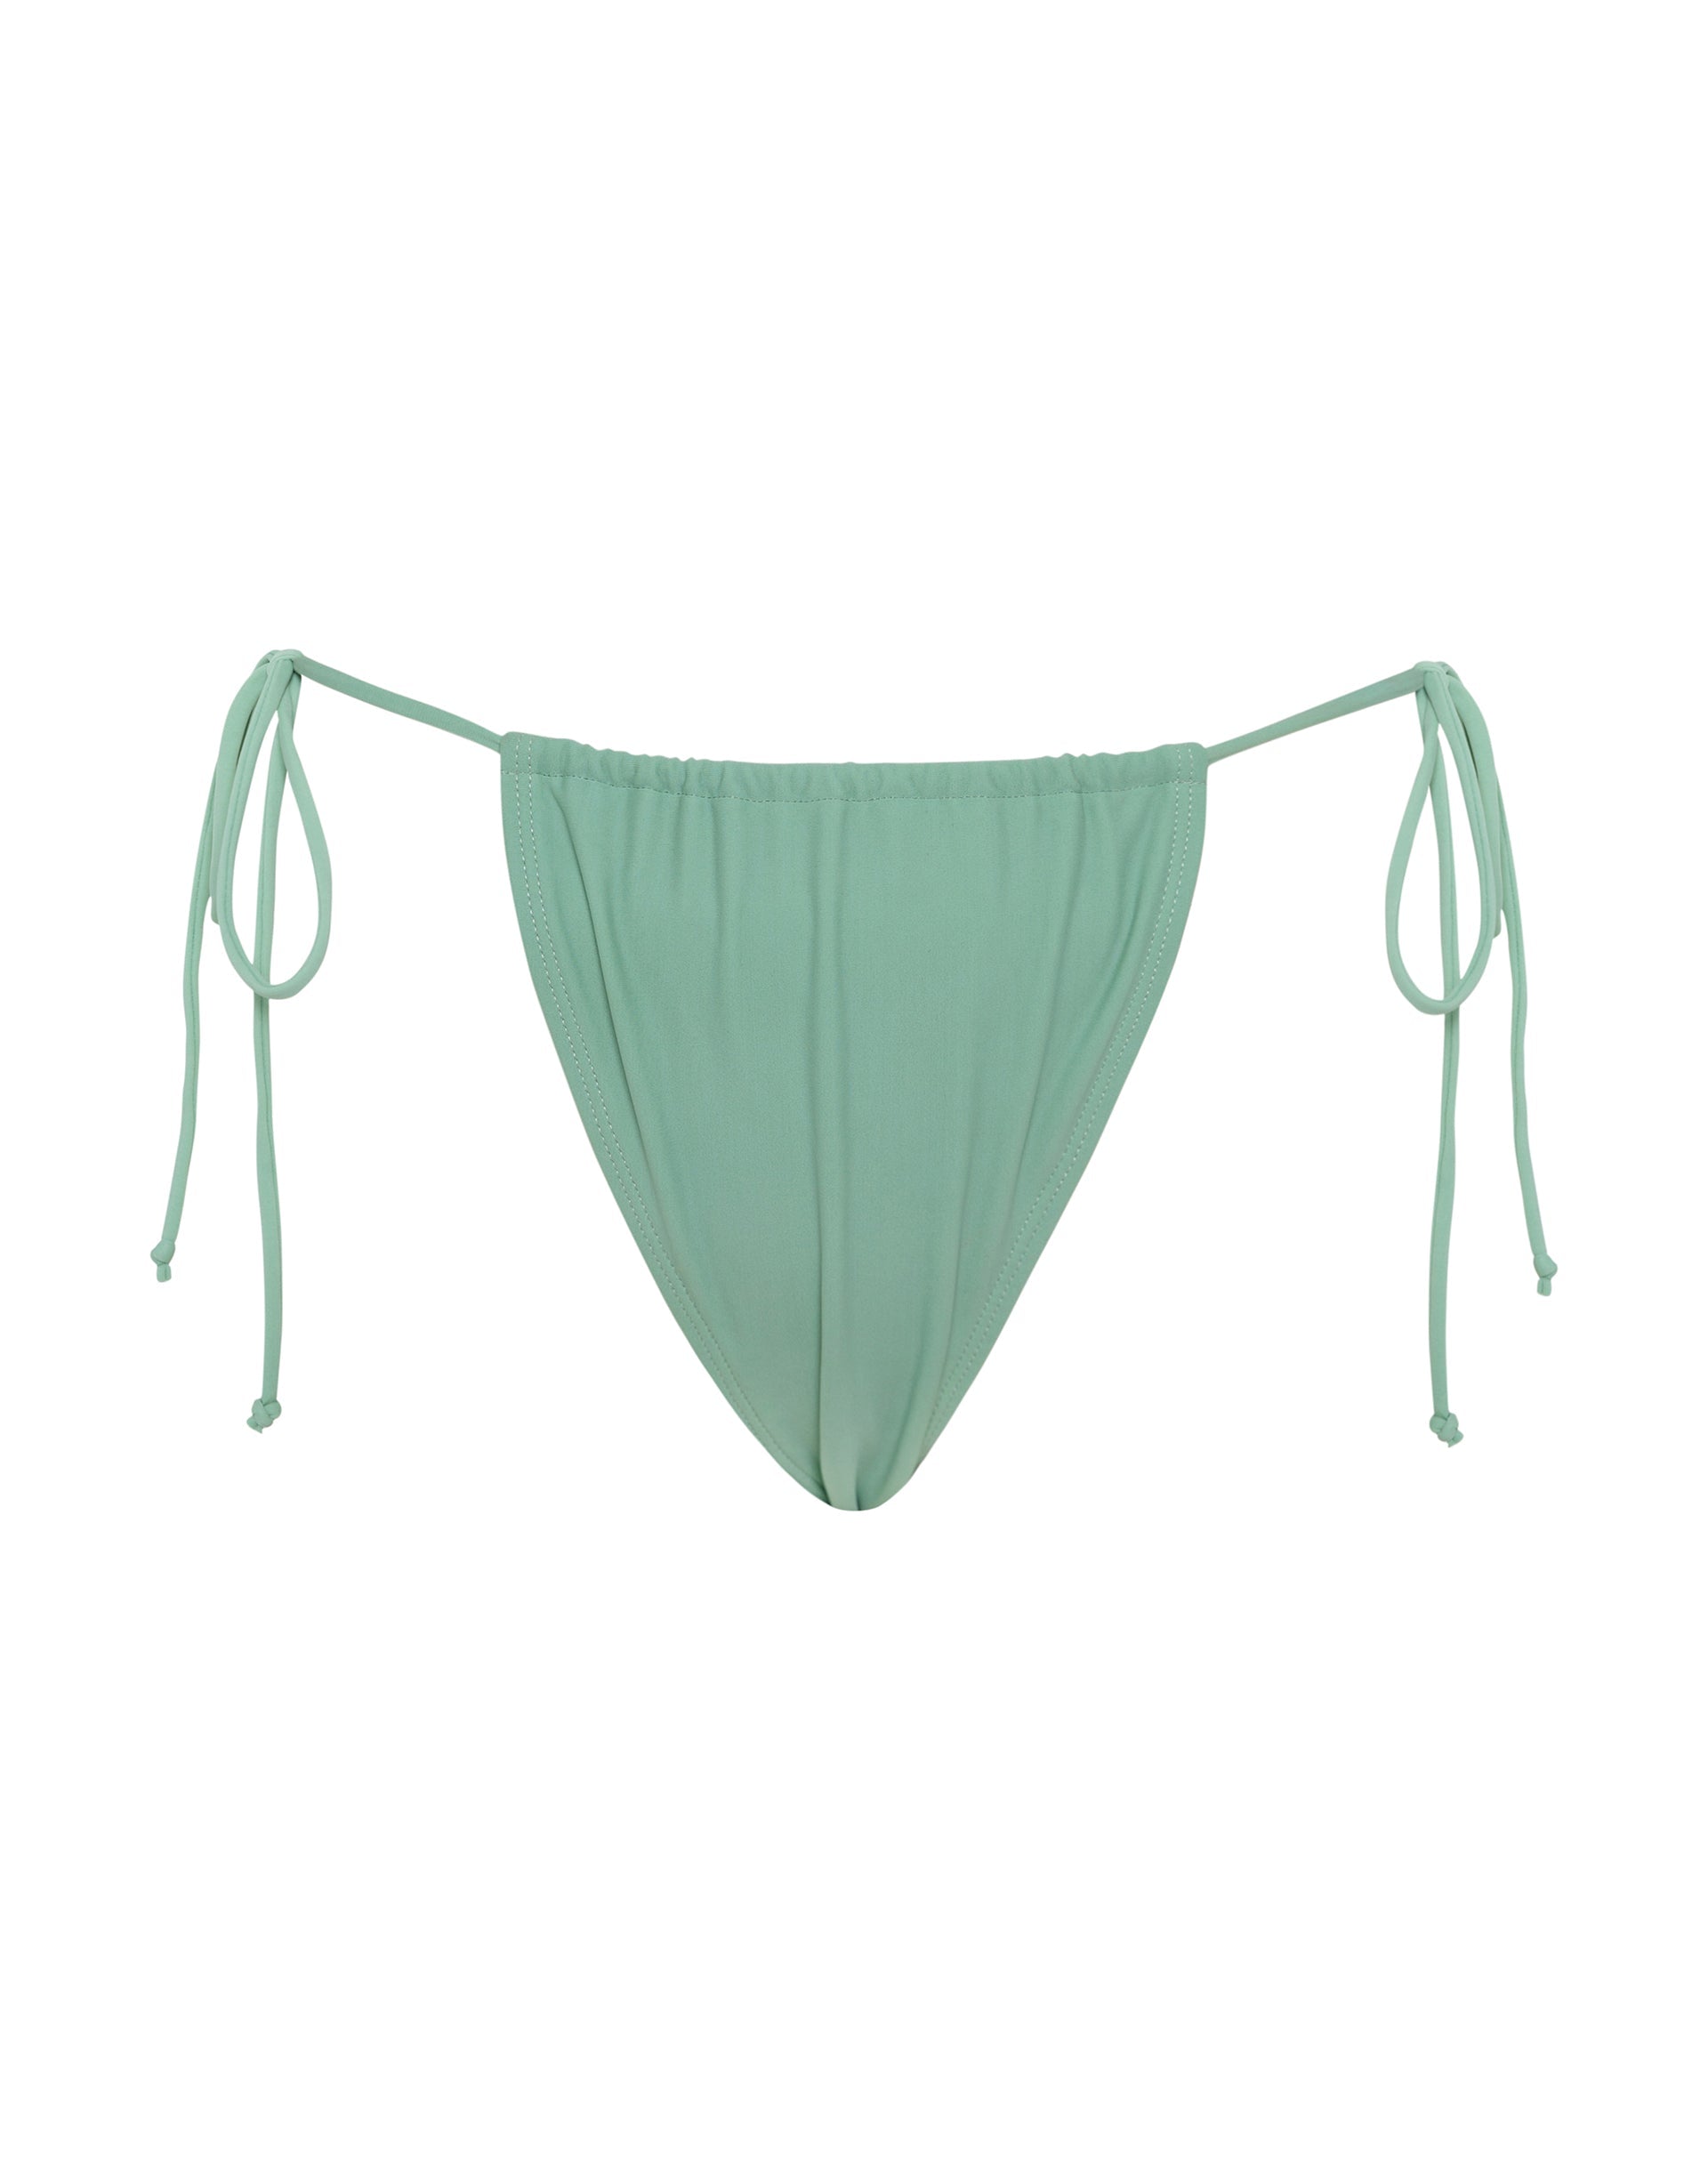 Image of Leyna Bikini Bottom in Lichen Green